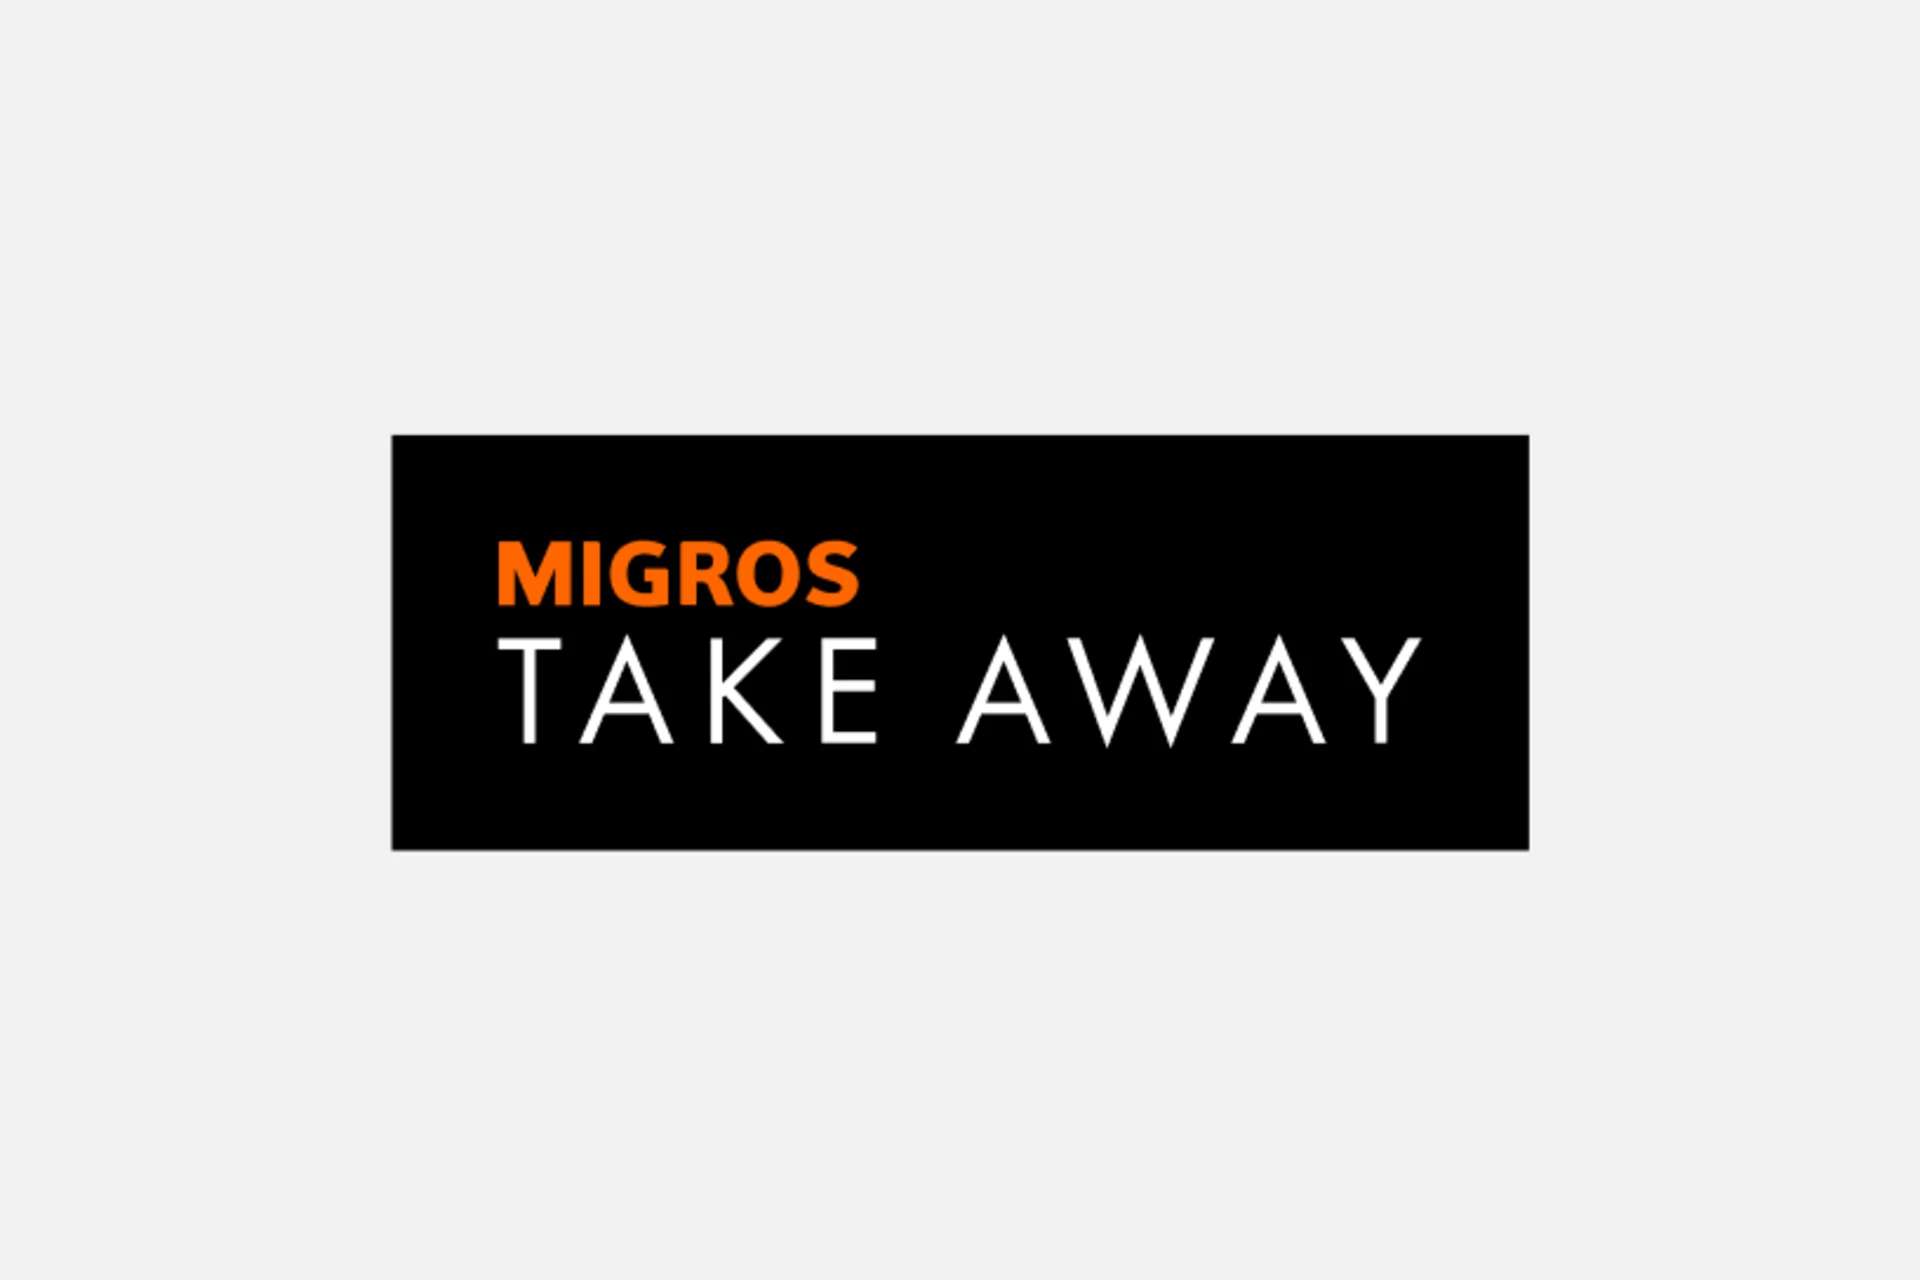 Migros Take Away logo